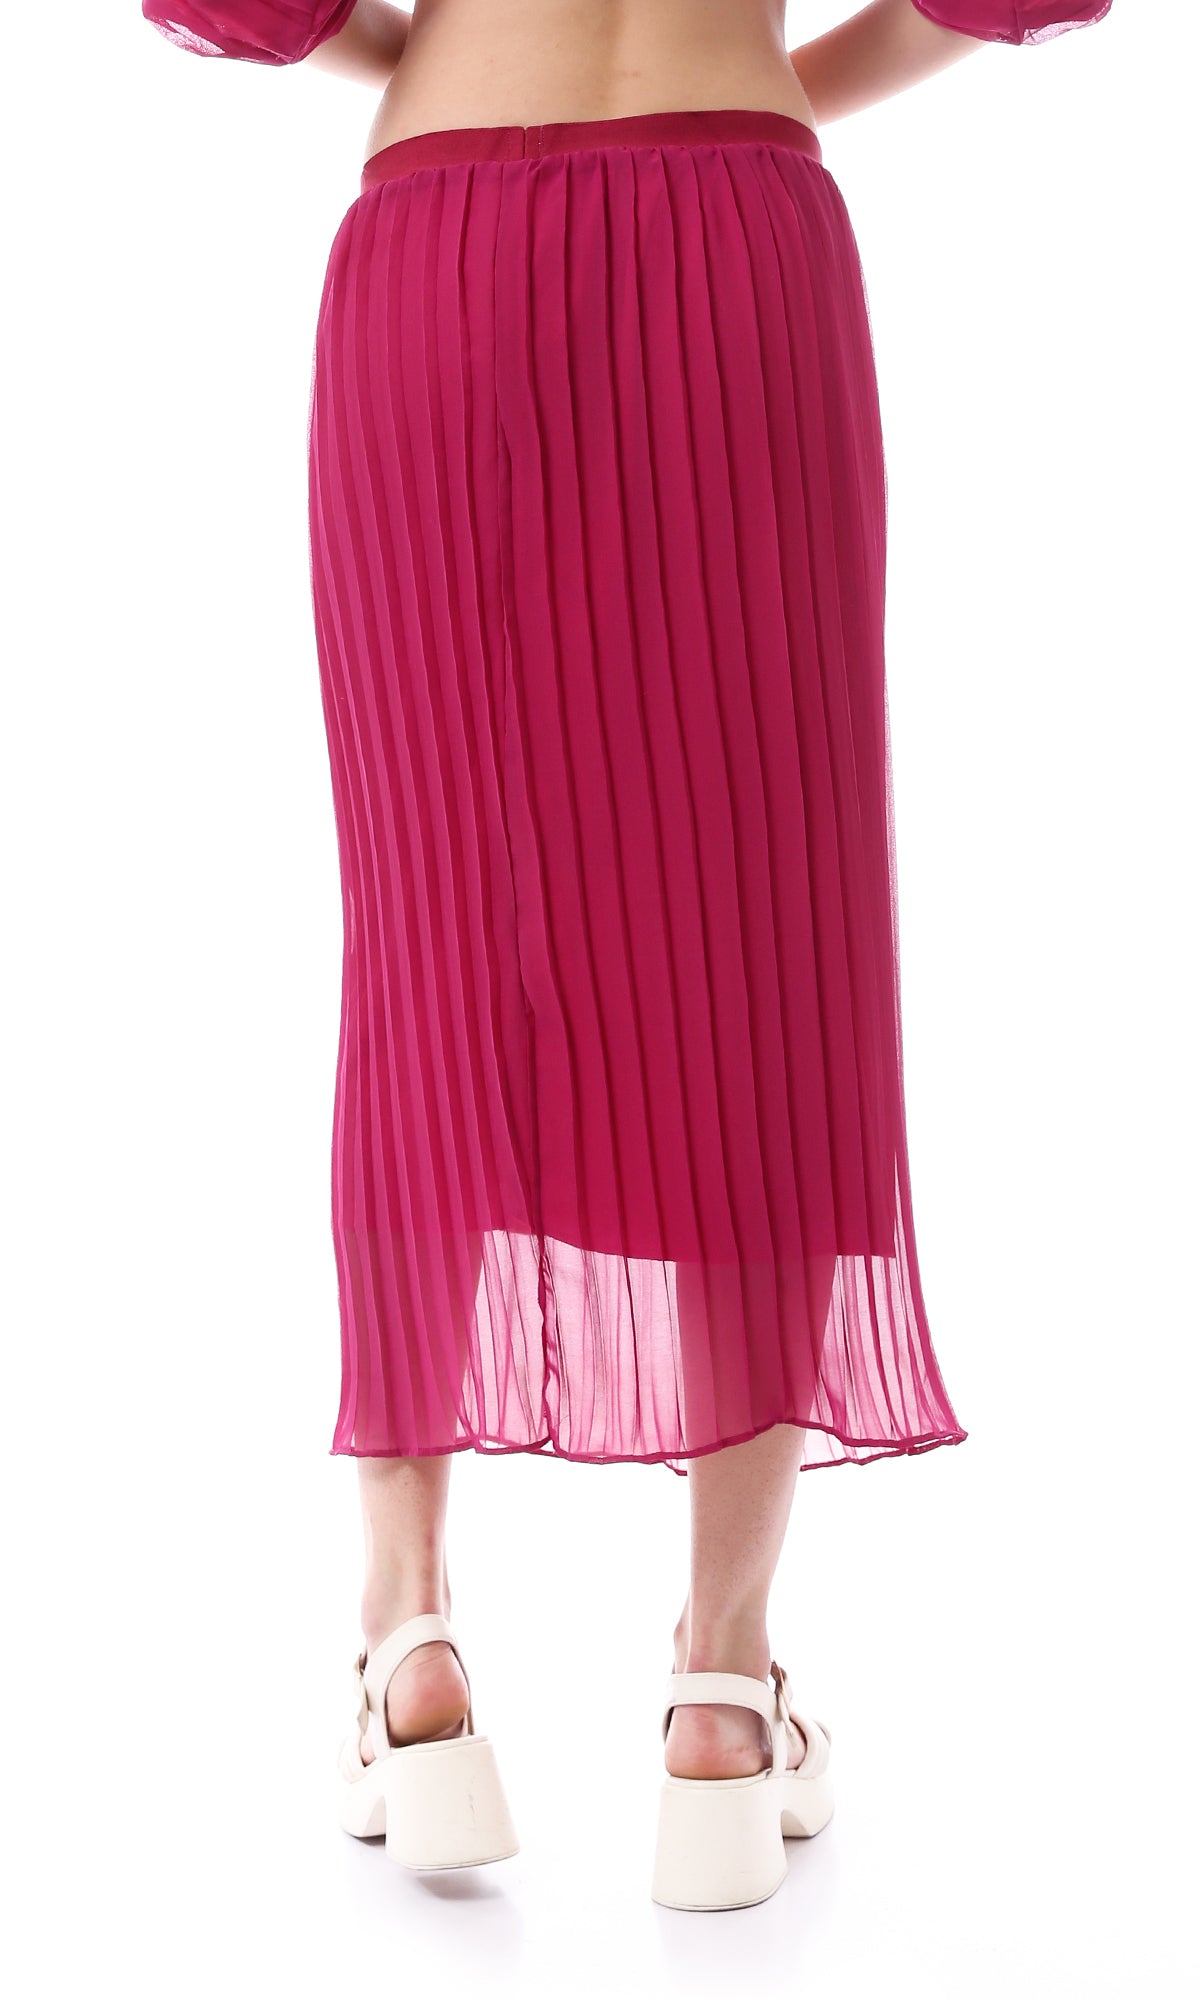 O166416 Elastic Waist Dark Fuchsia Plisse Skirt